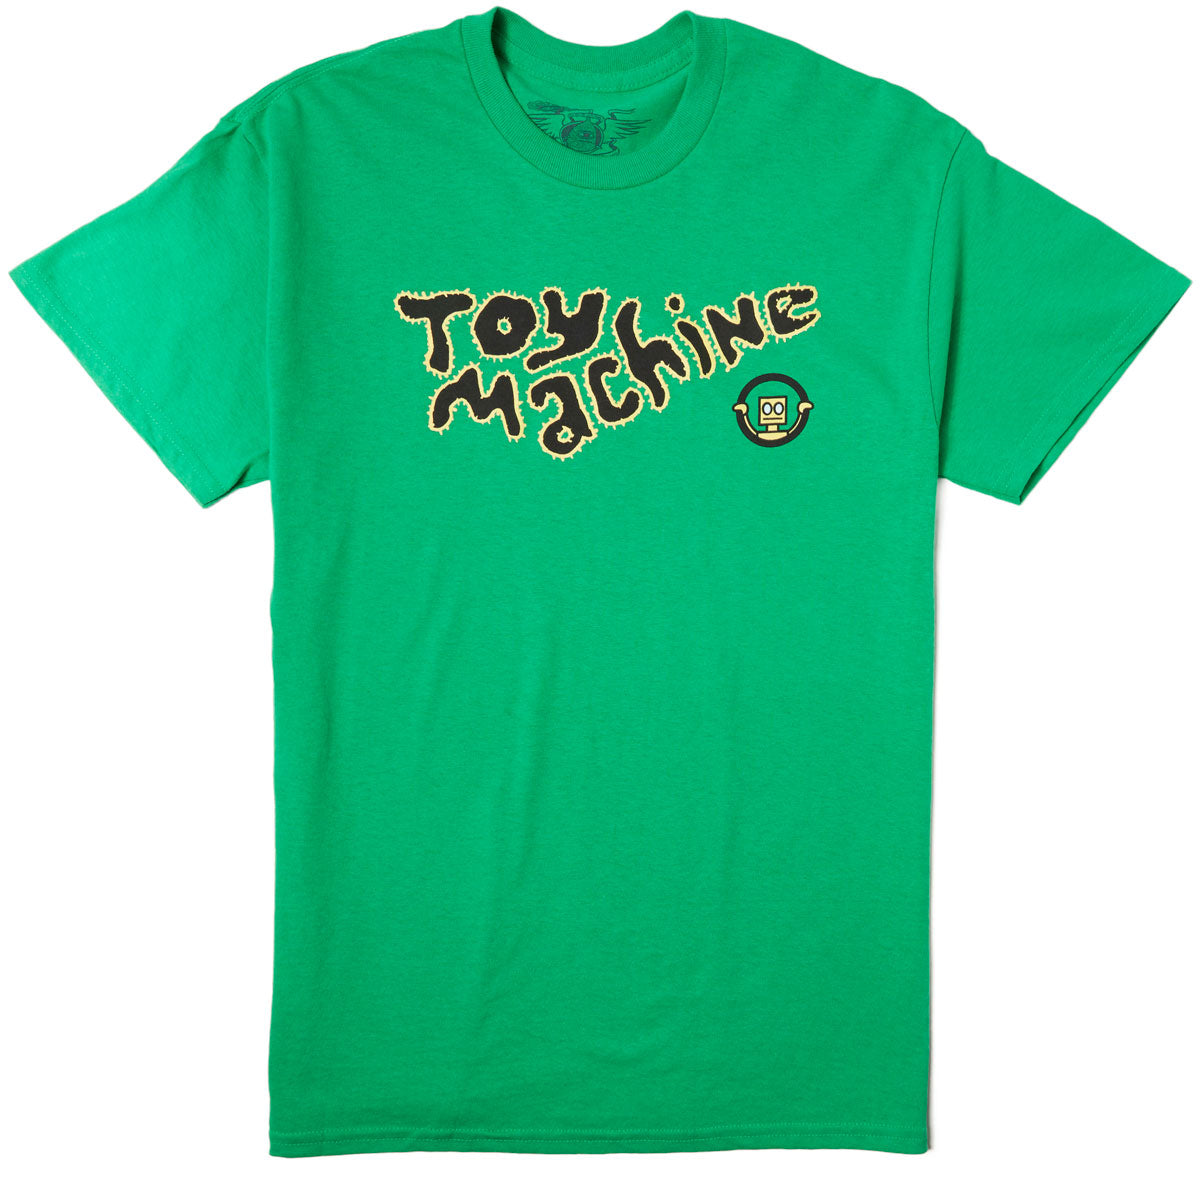 Toy Machine Robotoy T-Shirt - Kelly image 1